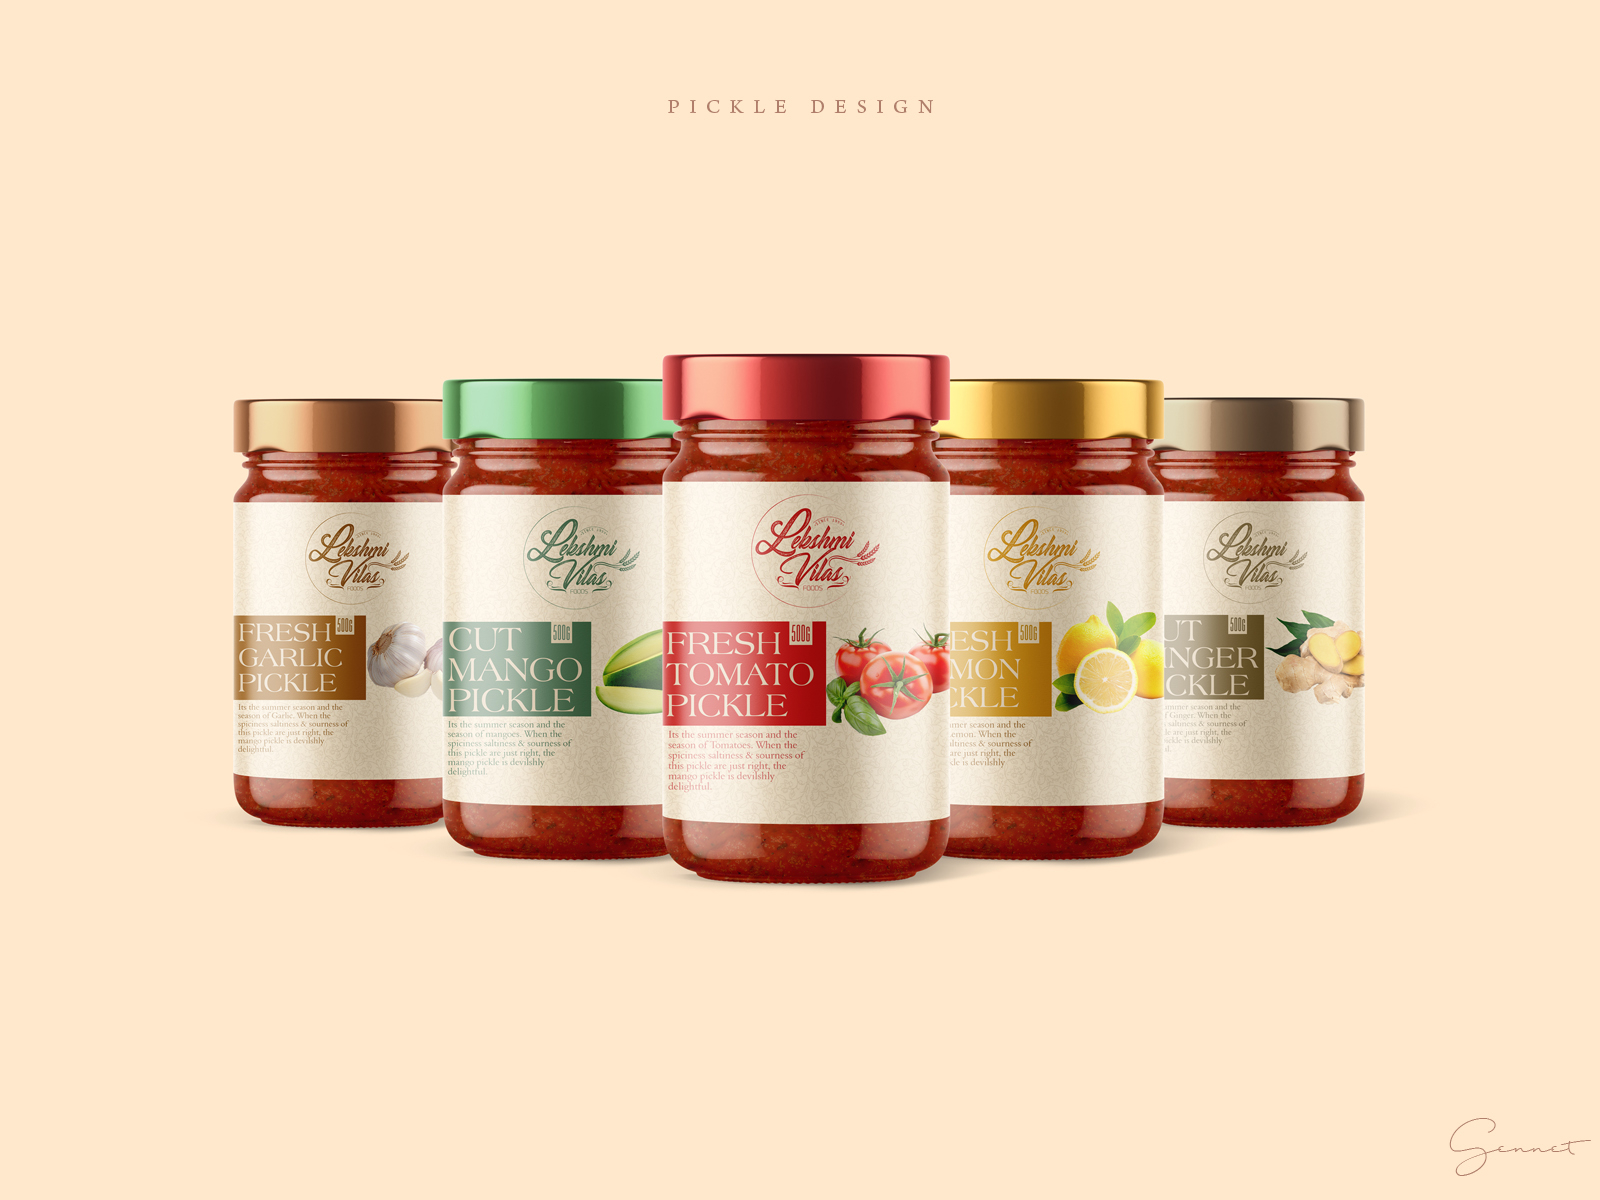 Download Pickle Bottle Design By Preeth Gennet On Dribbble